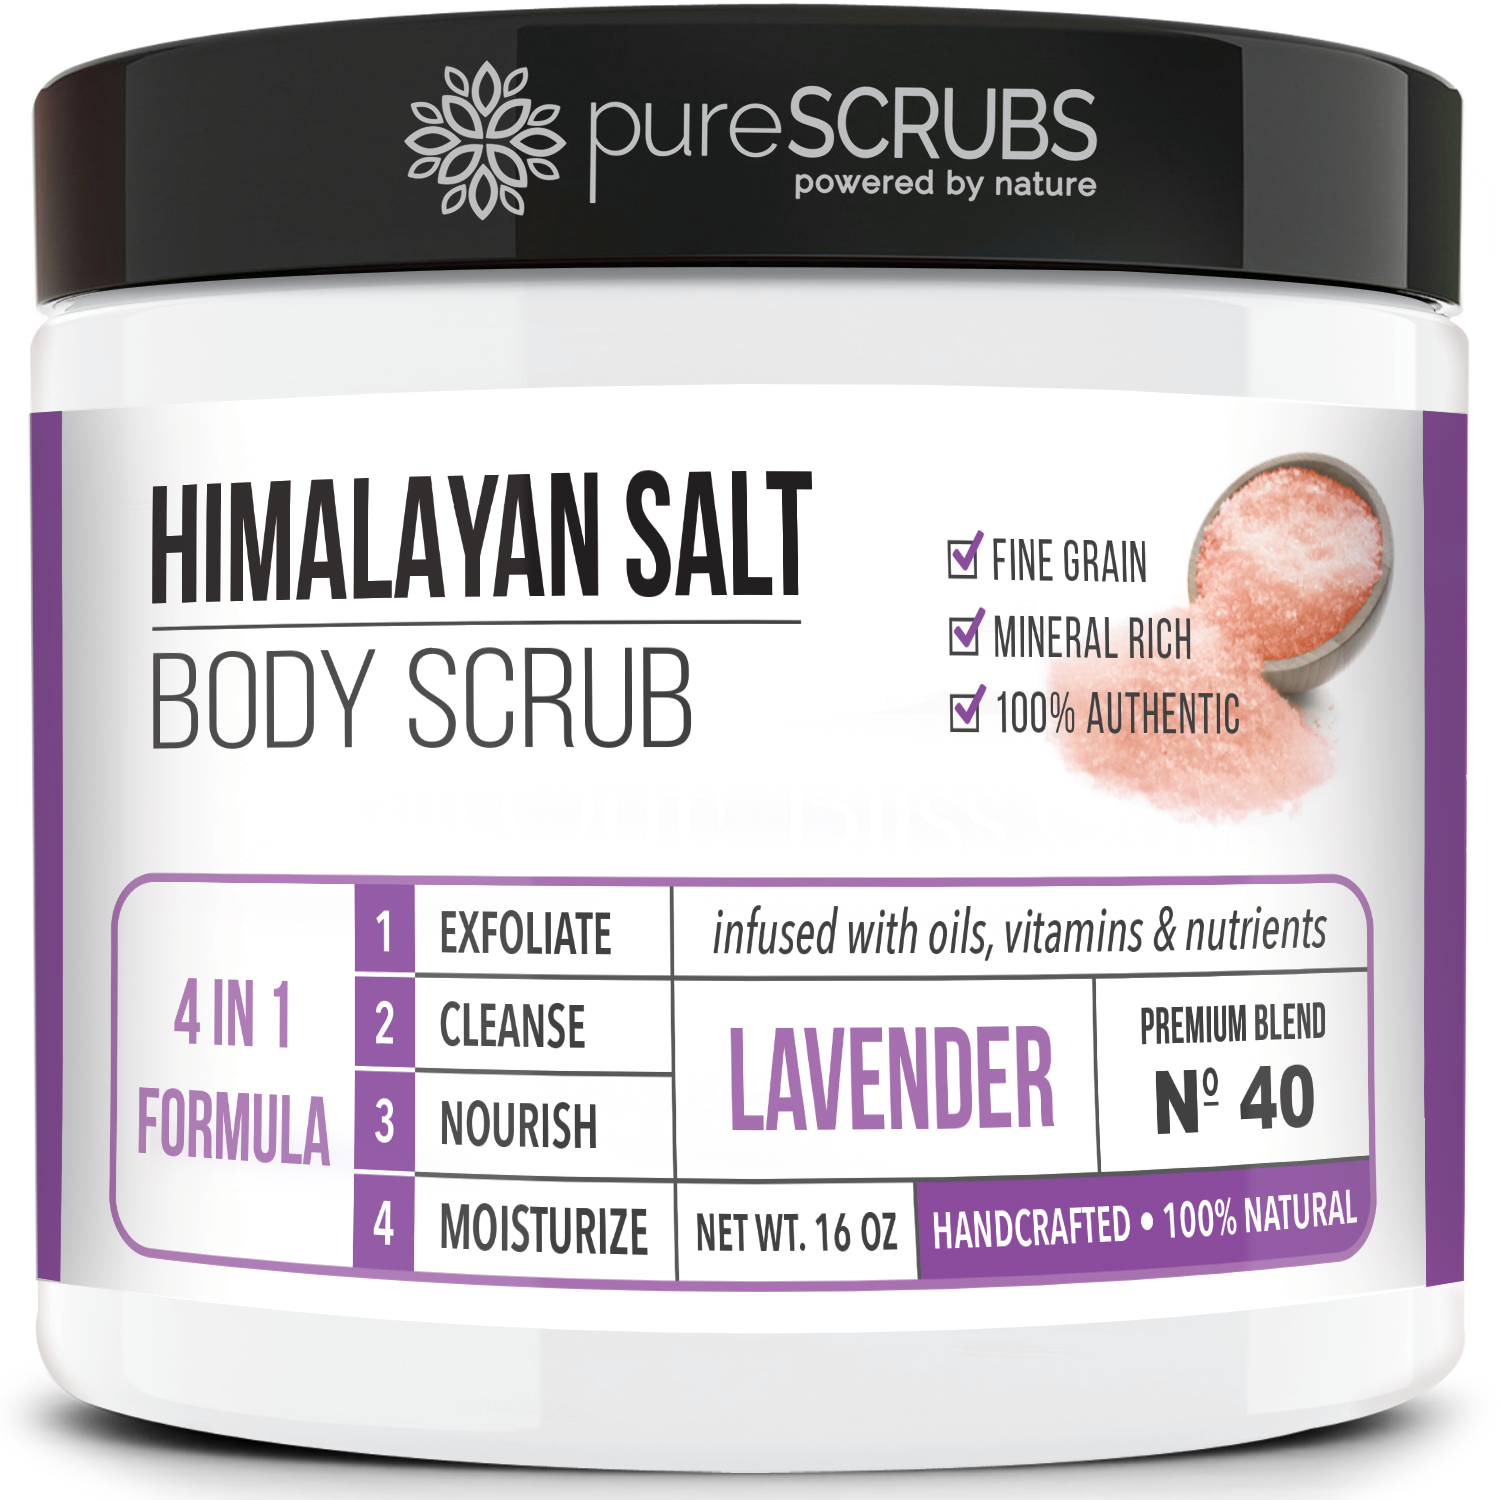 Lavender Body Scrub / Pink Himalayan Salt / Premium Blend #40